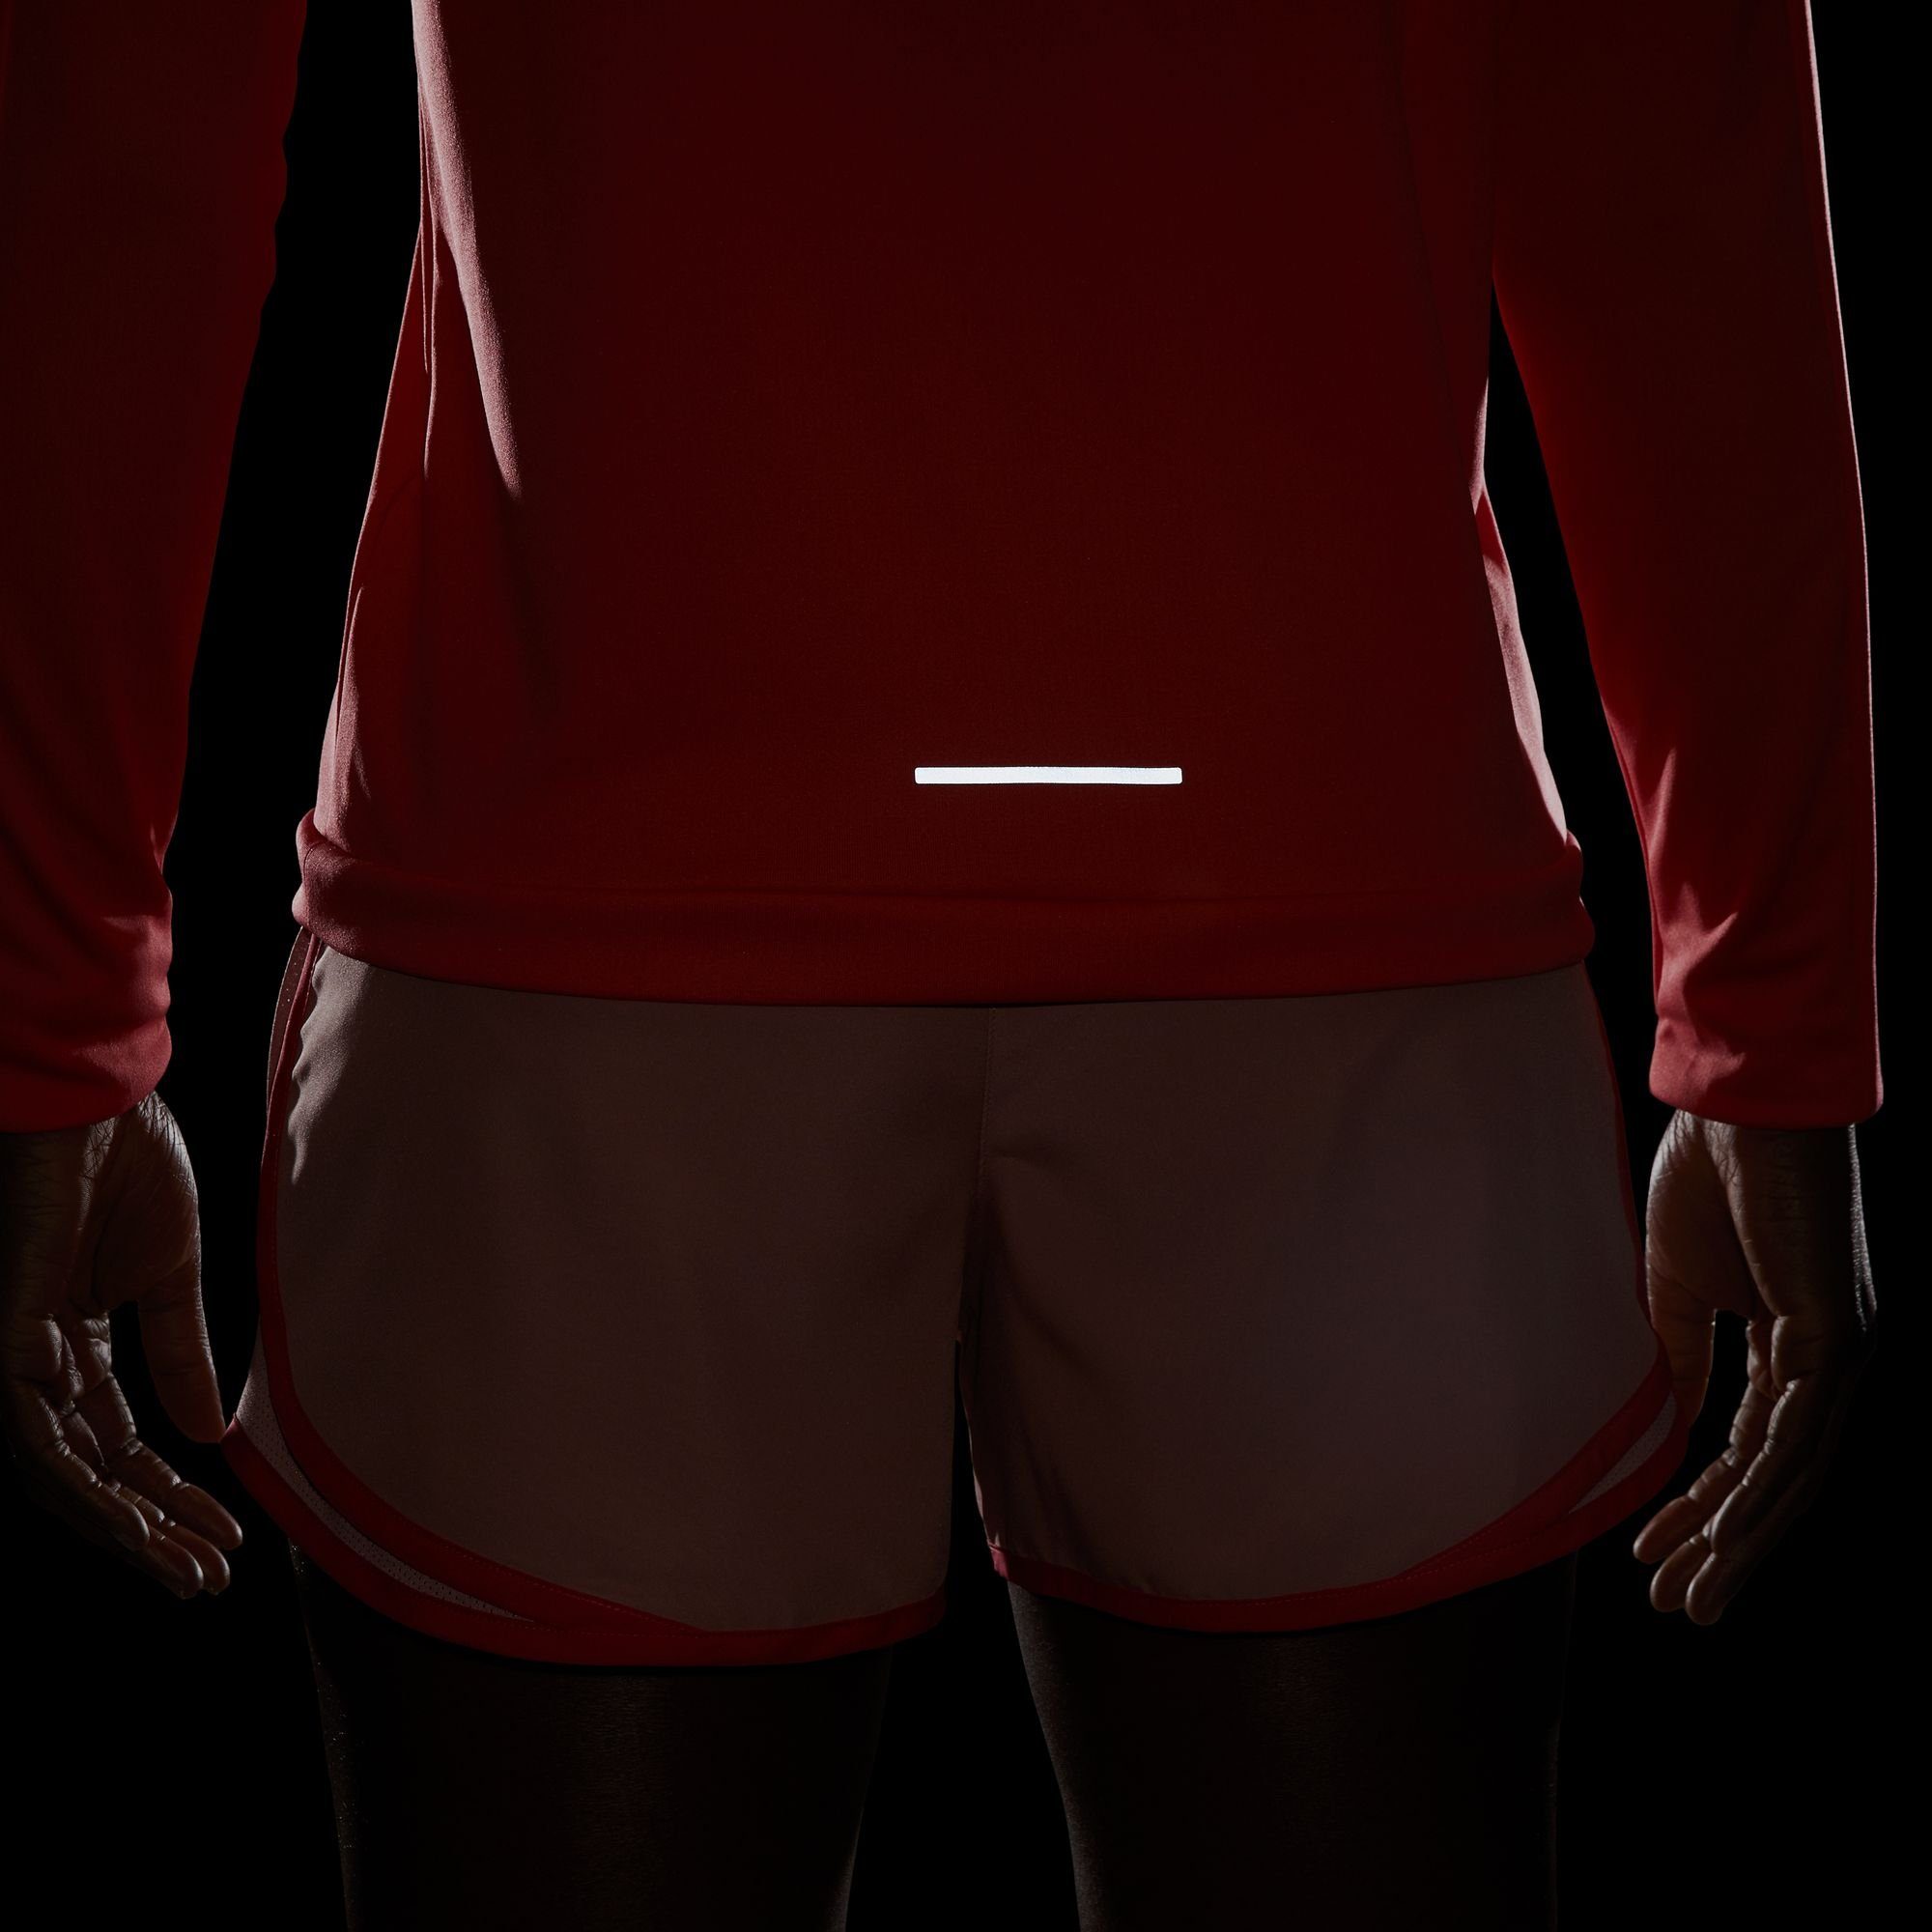 WOMEN'S EMBER RUNNING Laufshirt DRI-FIT TOP GLOW/REFLECTIVE CREW-NECK SILV Nike